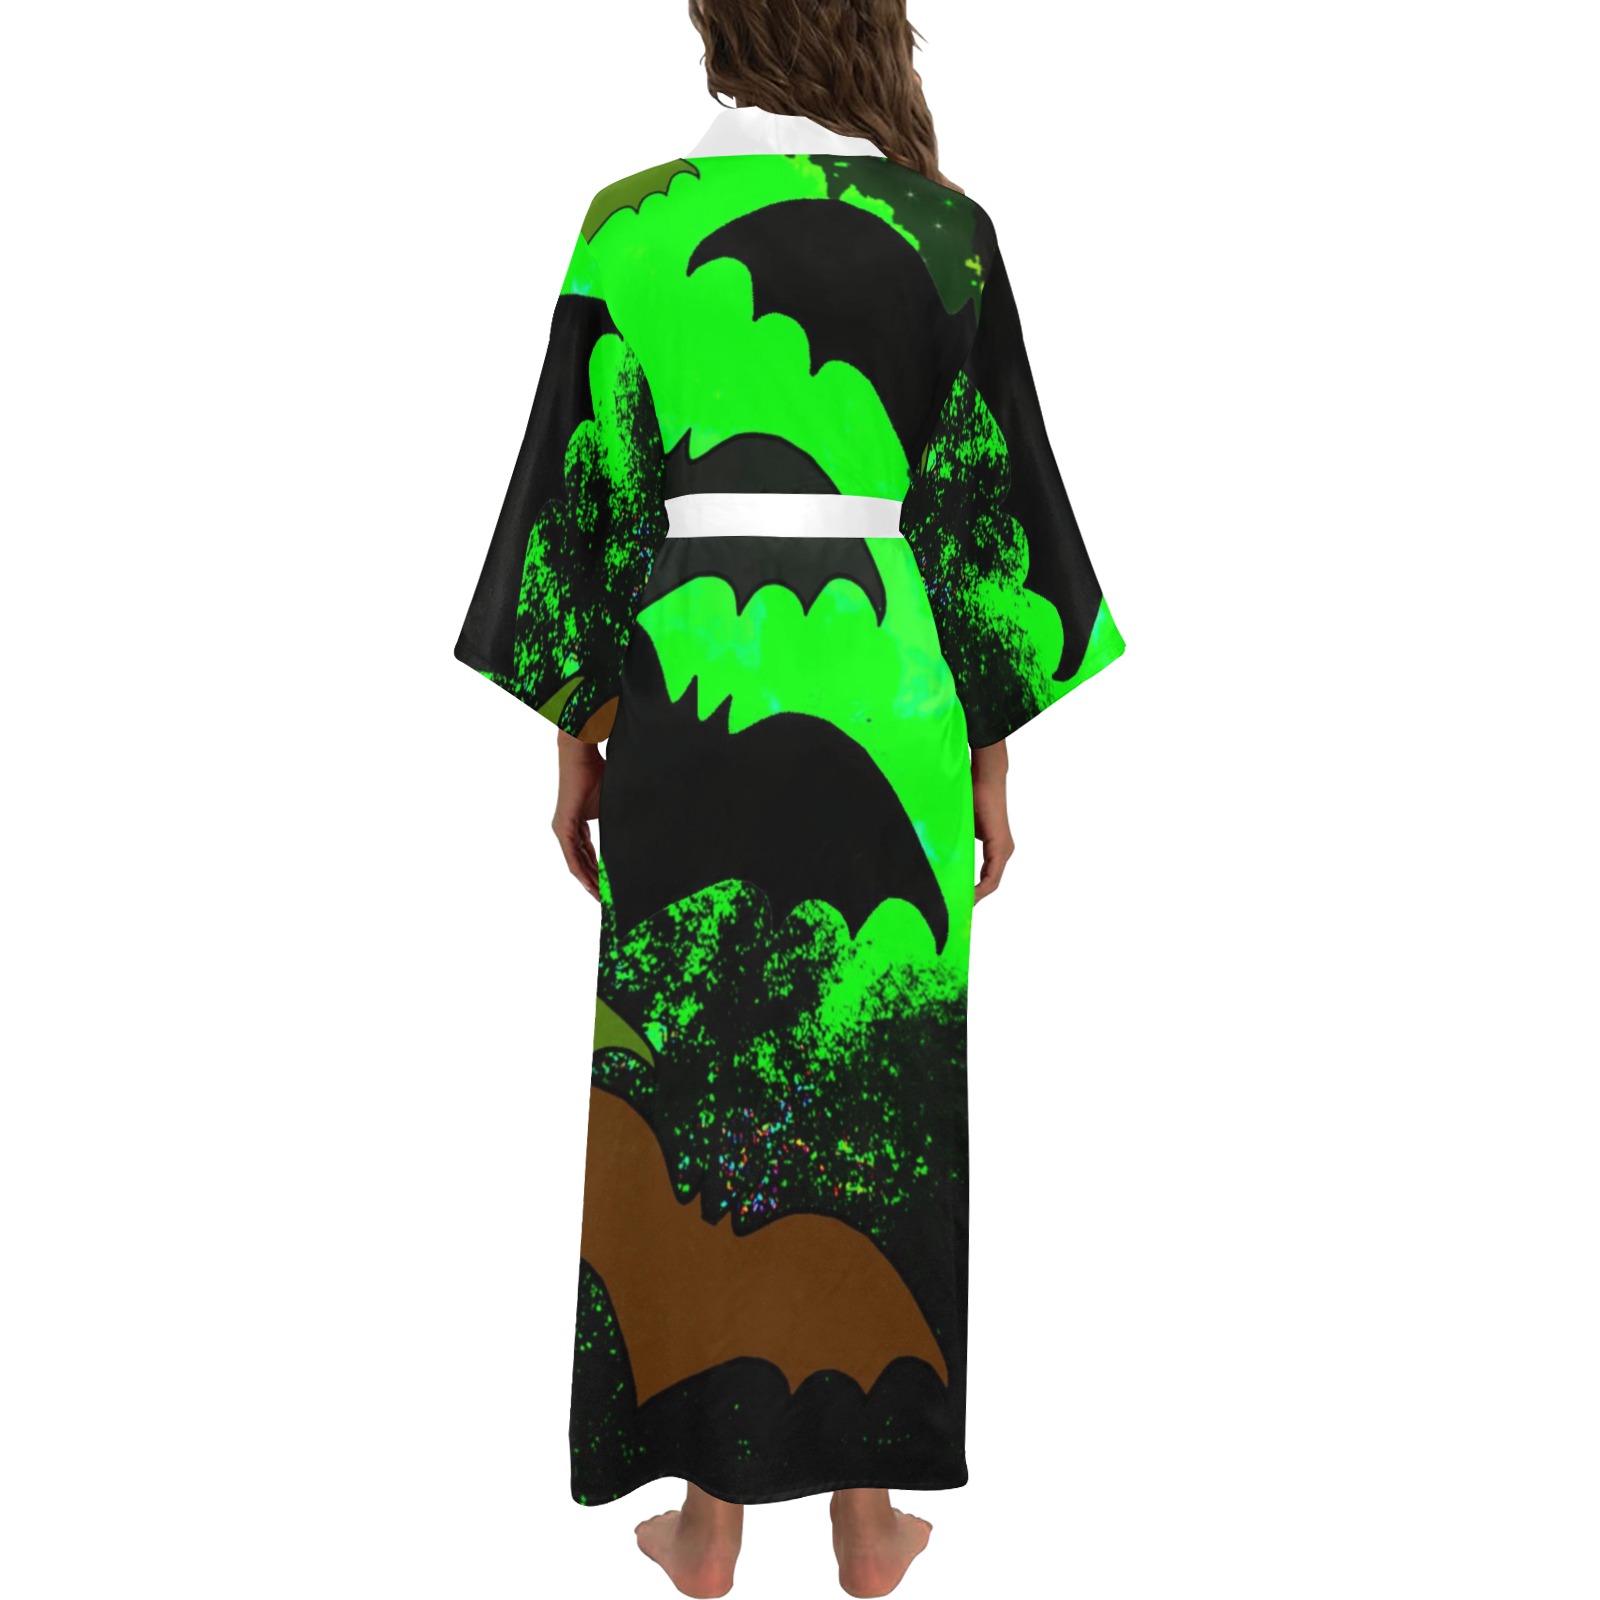 Bats In Flight Green Long Kimono Robe